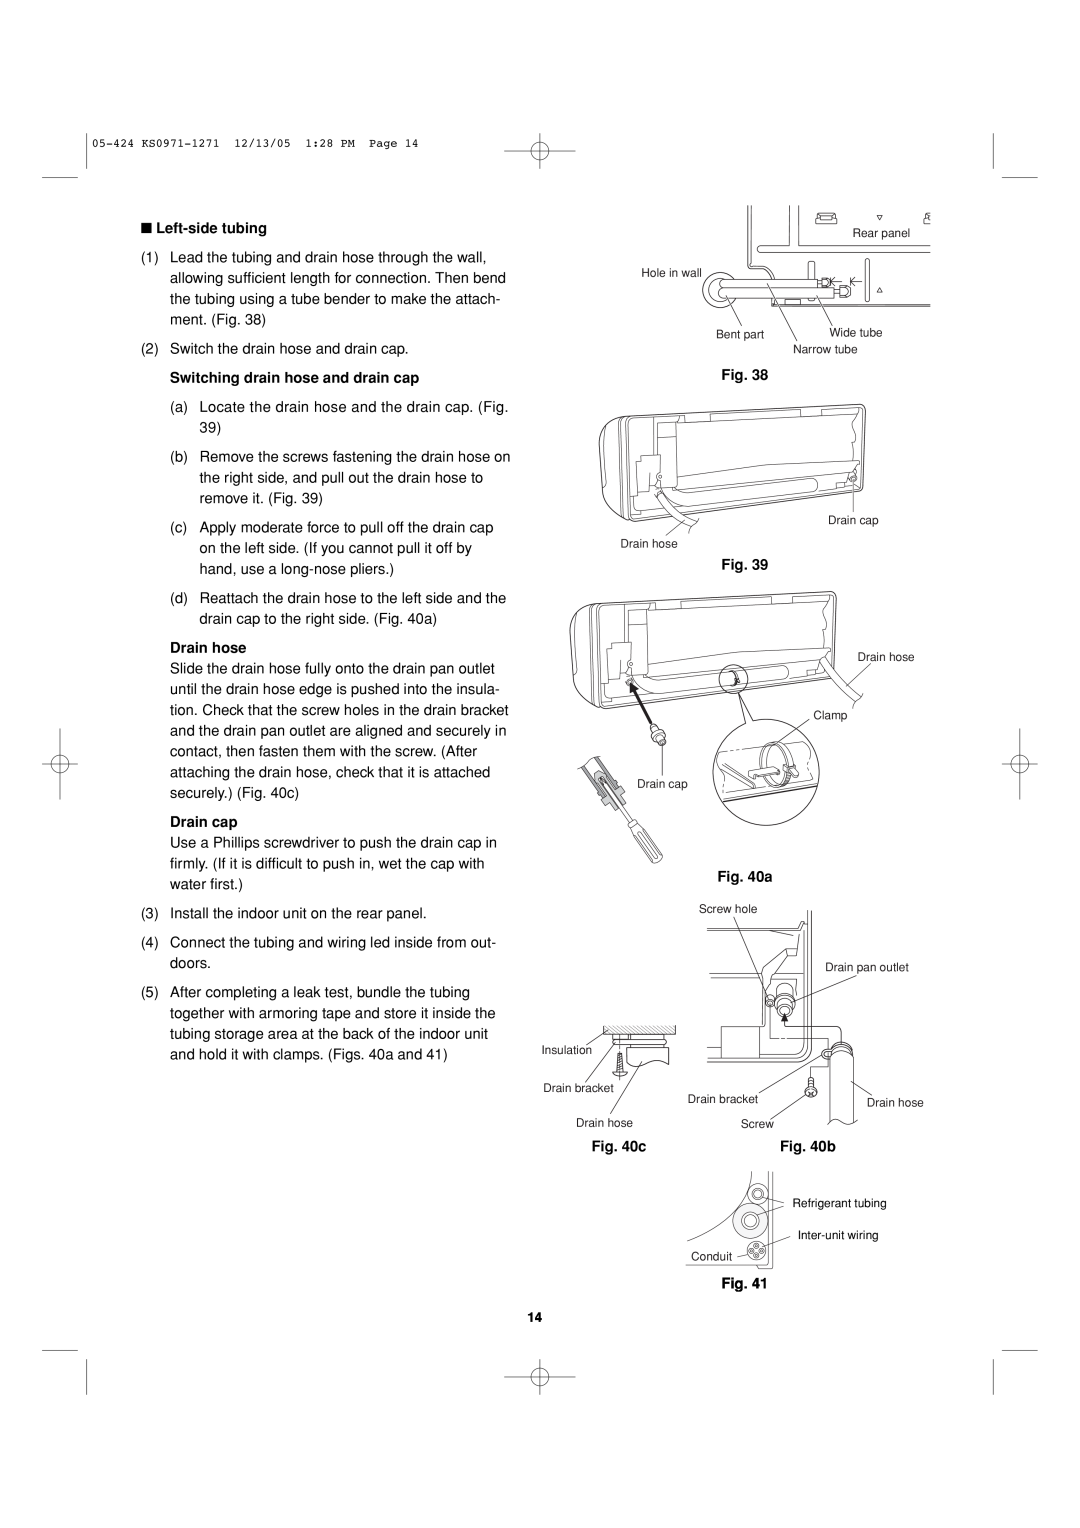 Sanyo Cool/Dry installation instructions Left-sidetubing 